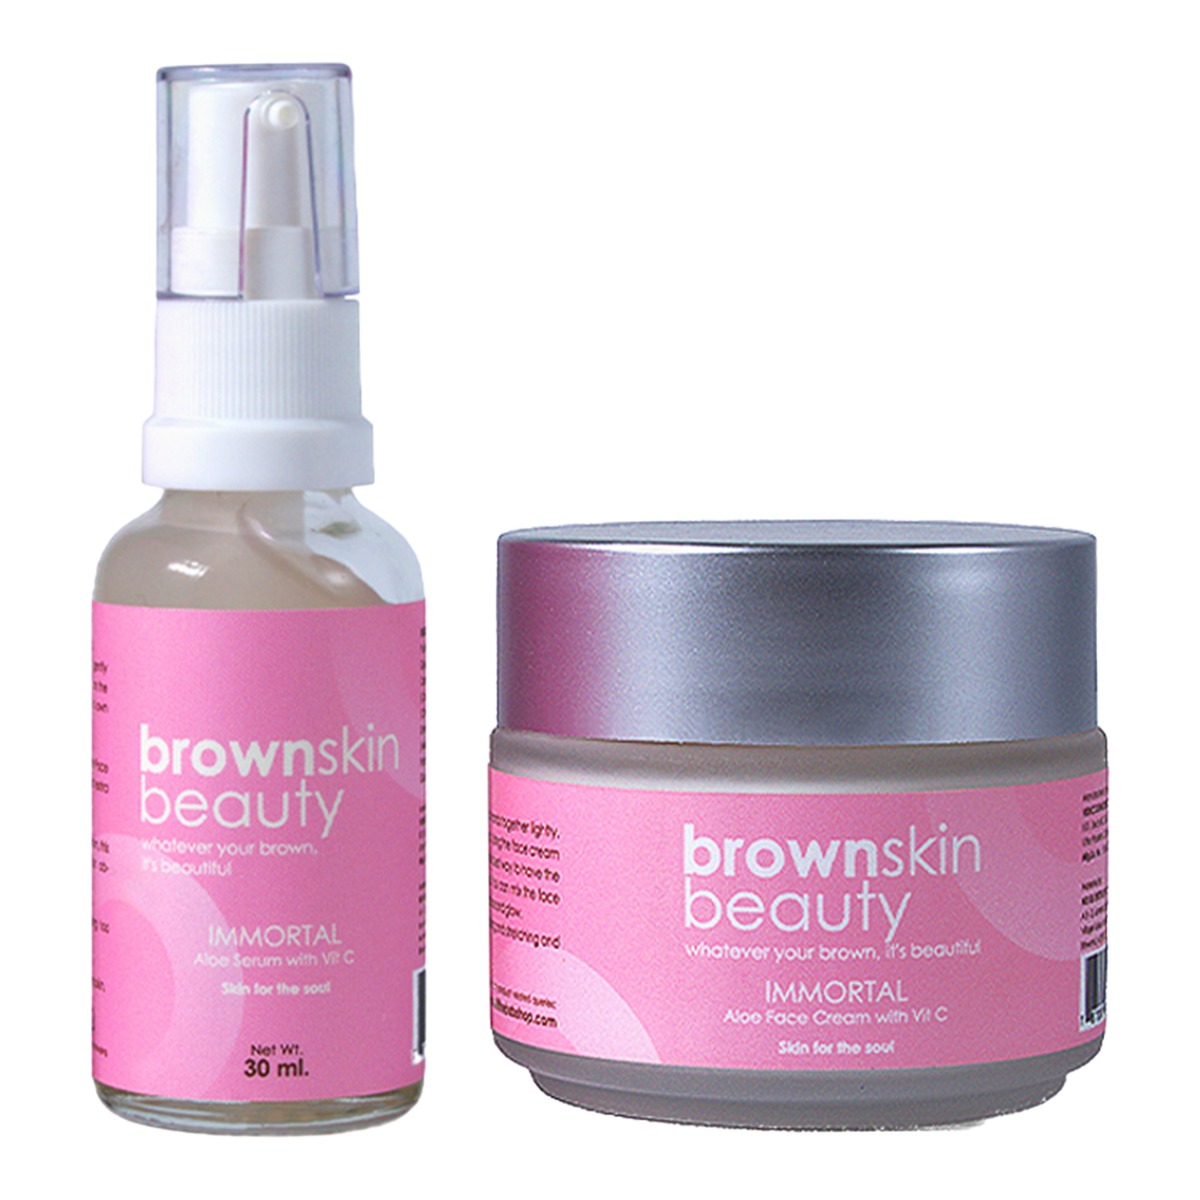  BrownSkin Beauty Immortal Aloe Face serum & Face Cream Combo